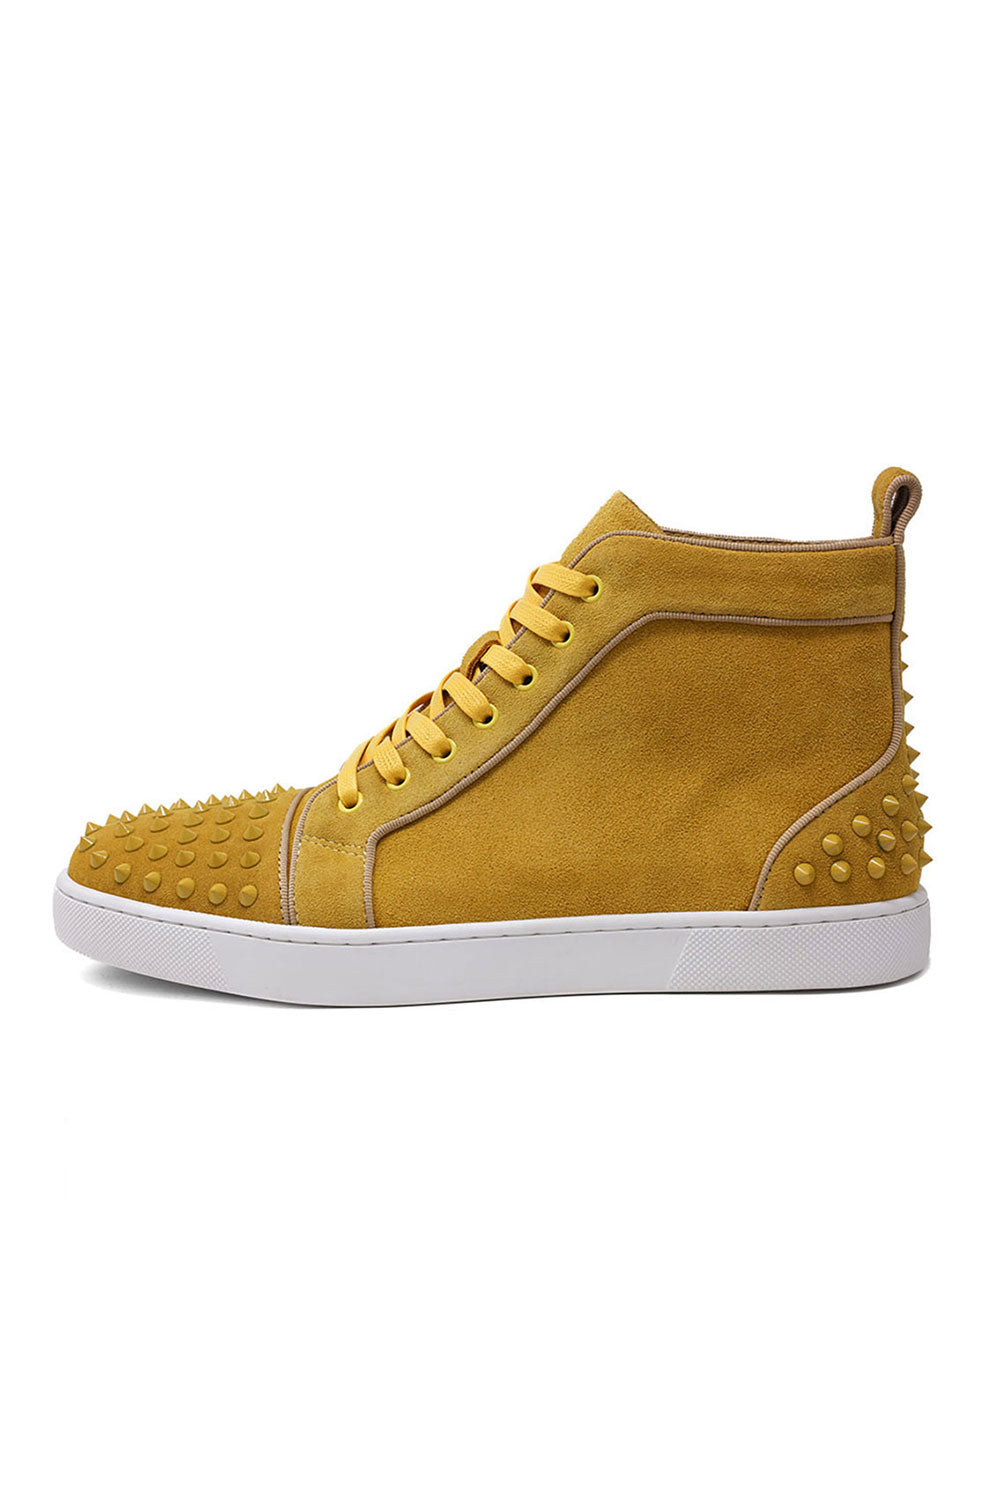 Barabas Men's Spike Design Luxury Suede High-Top Sneaker SH732 Mustard